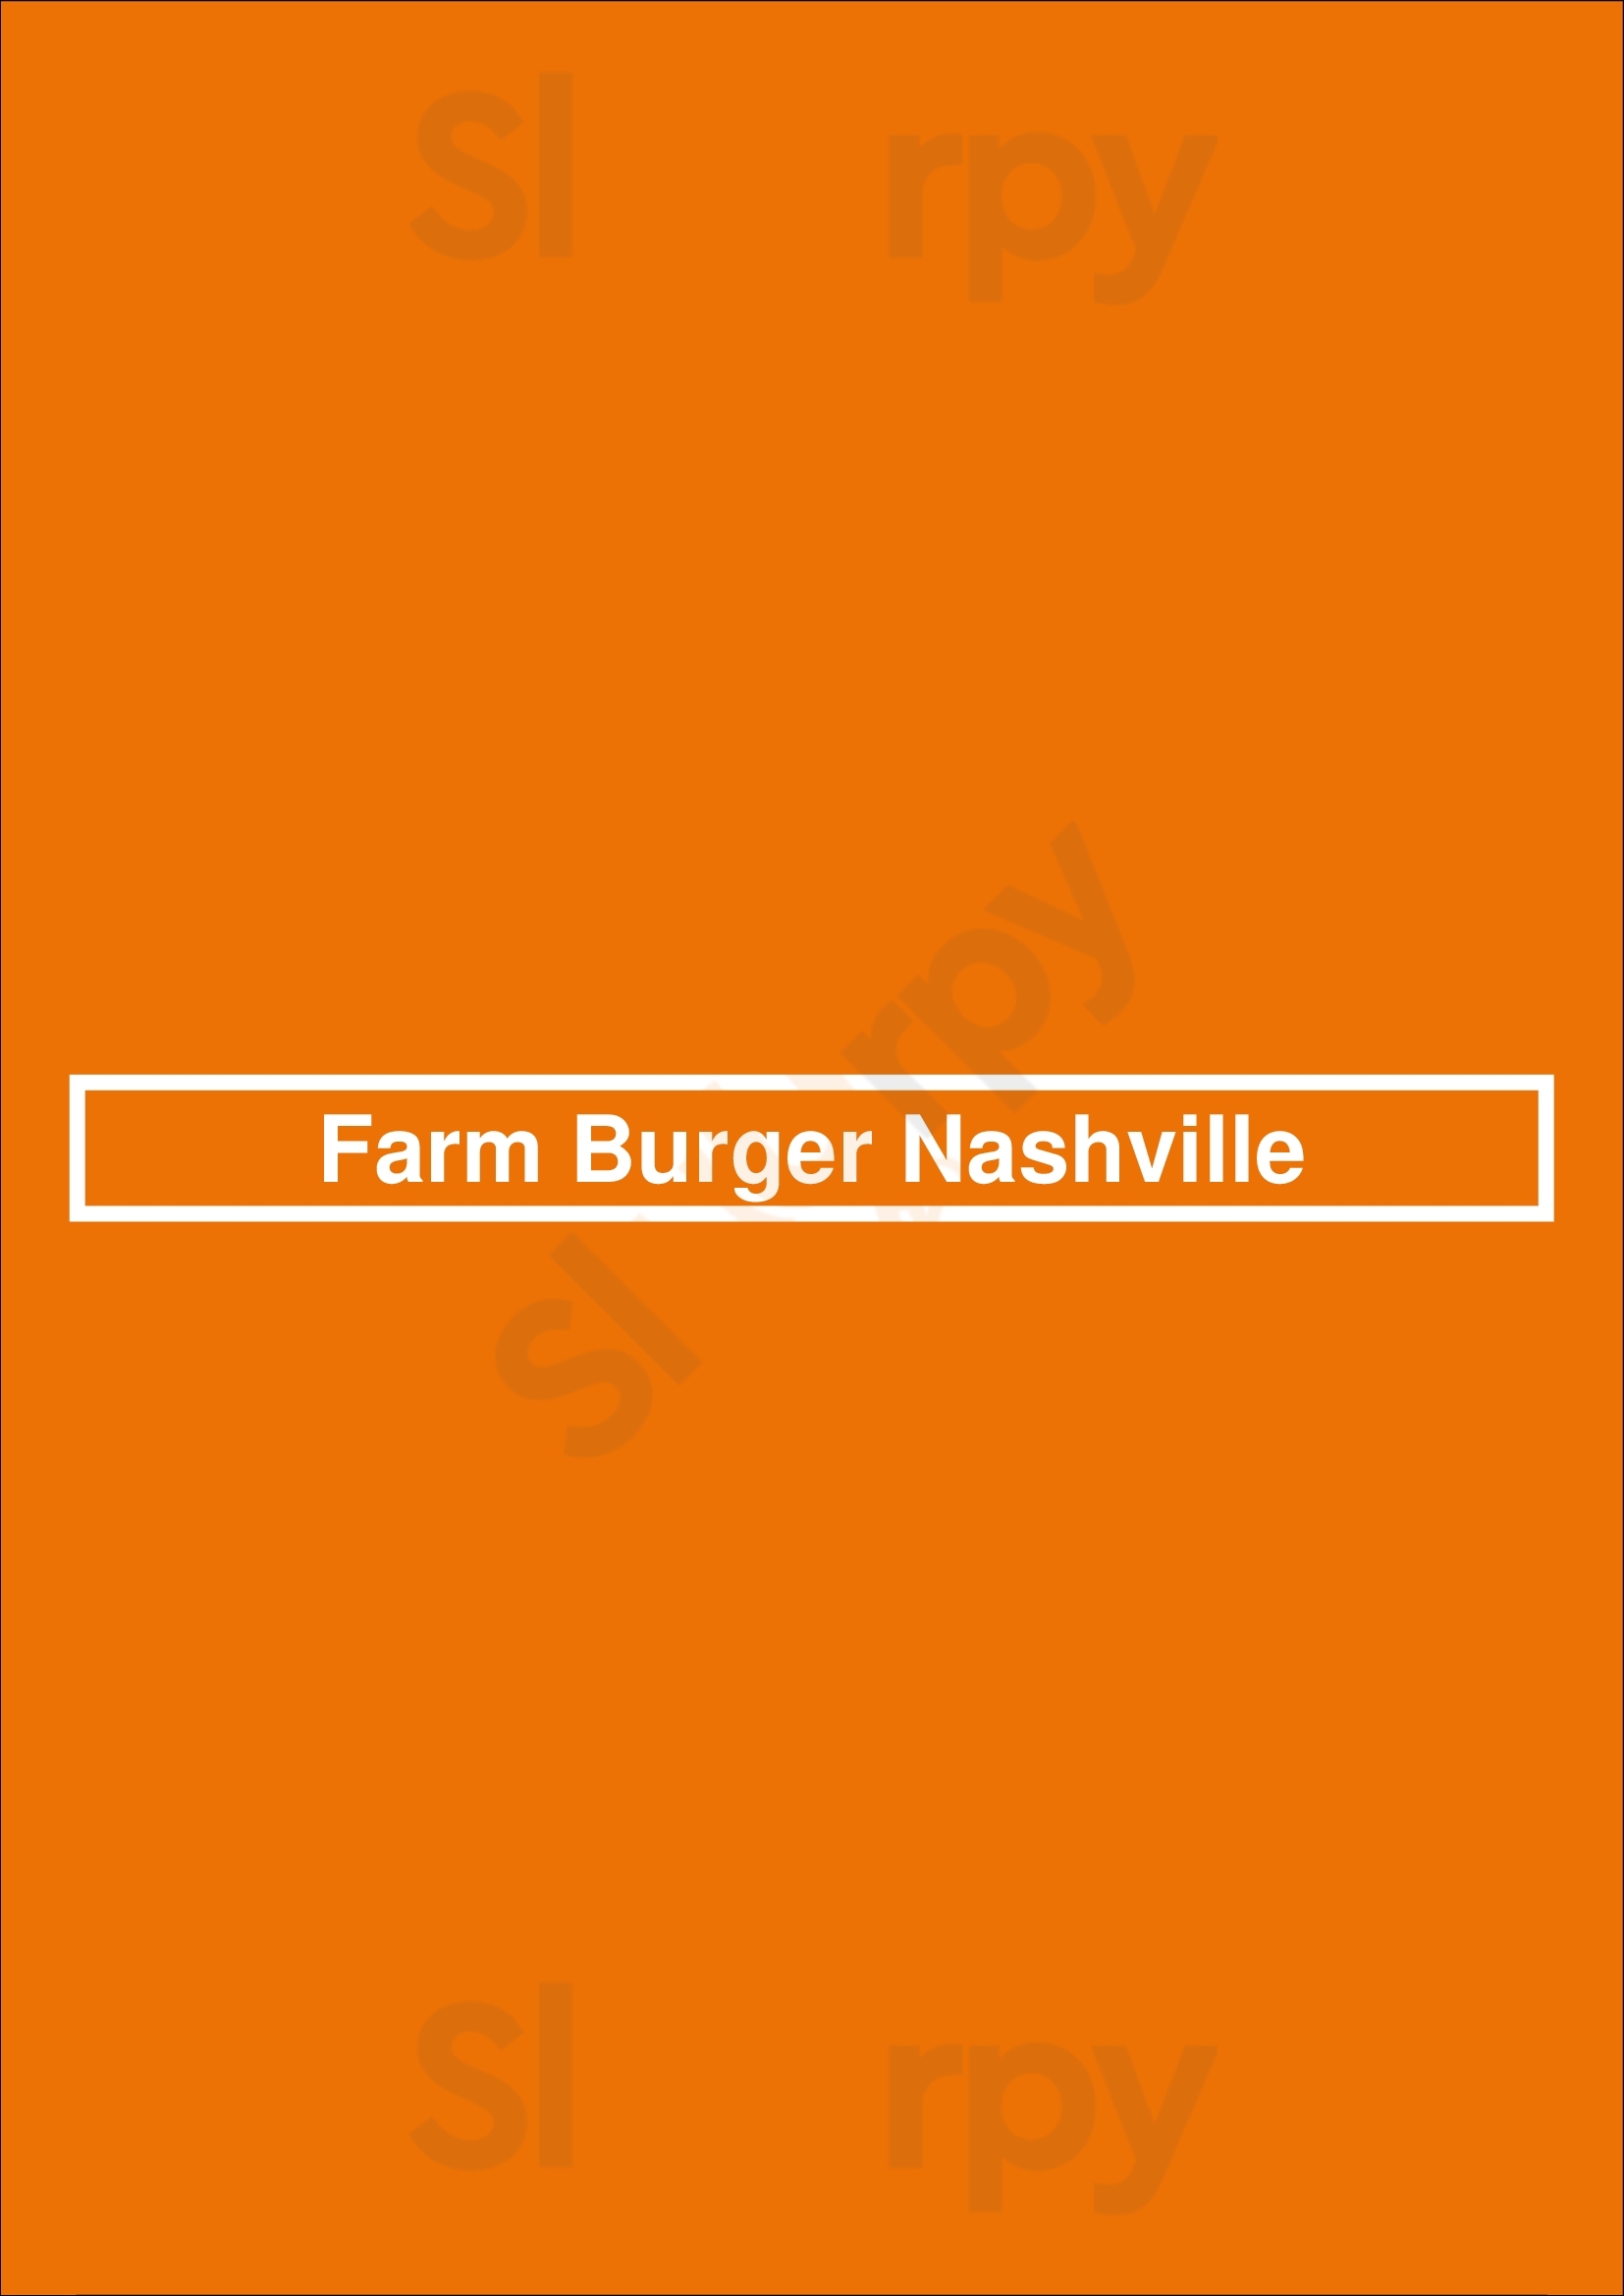 Farm Burger Nashville Nashville Menu - 1